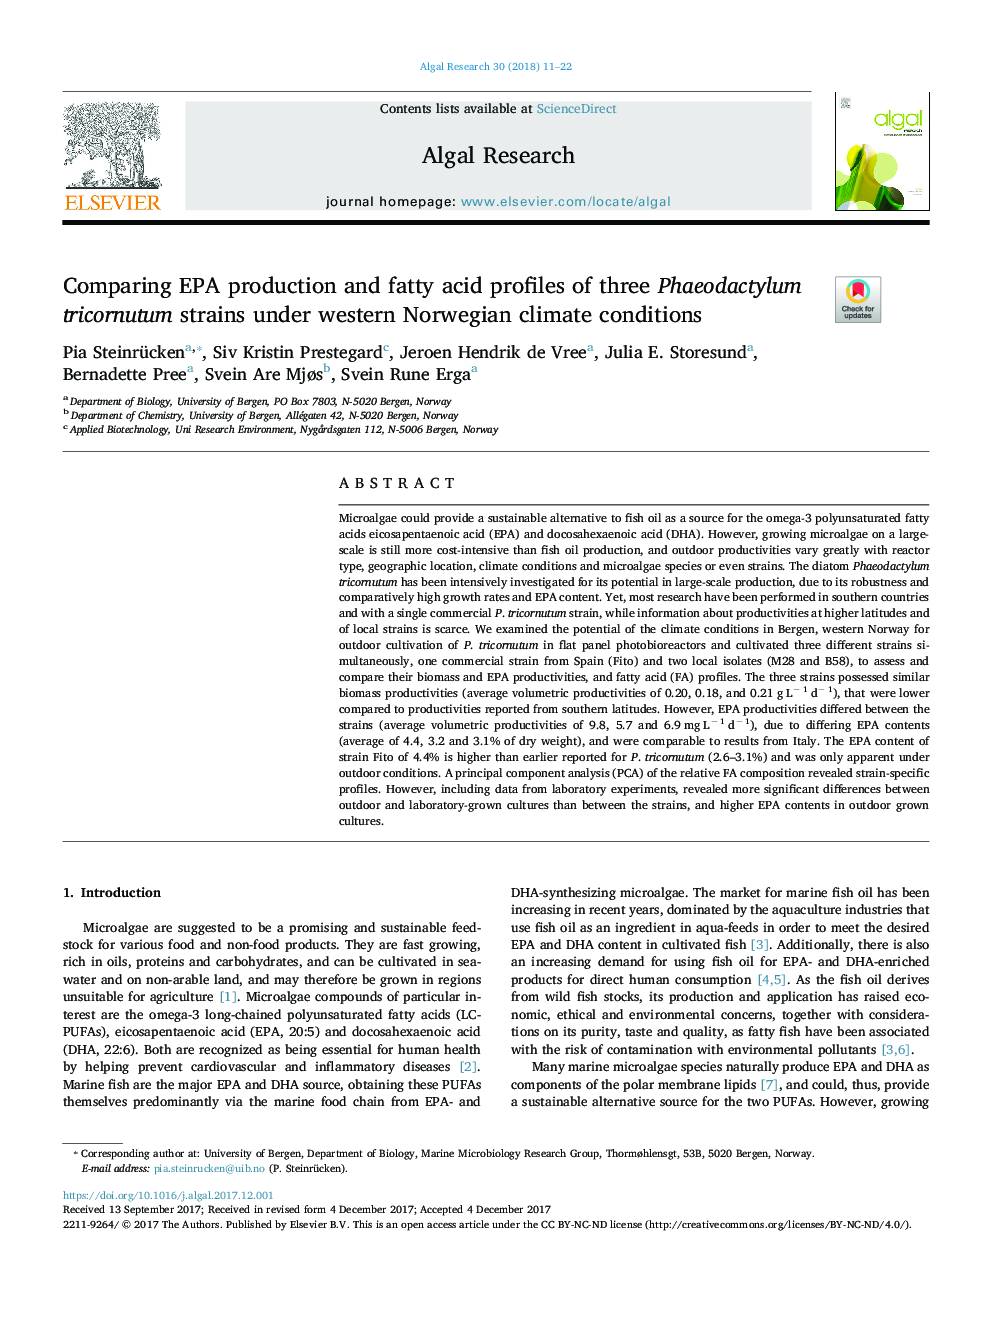 Comparing EPA production and fatty acid profiles of three Phaeodactylum tricornutum strains under western Norwegian climate conditions